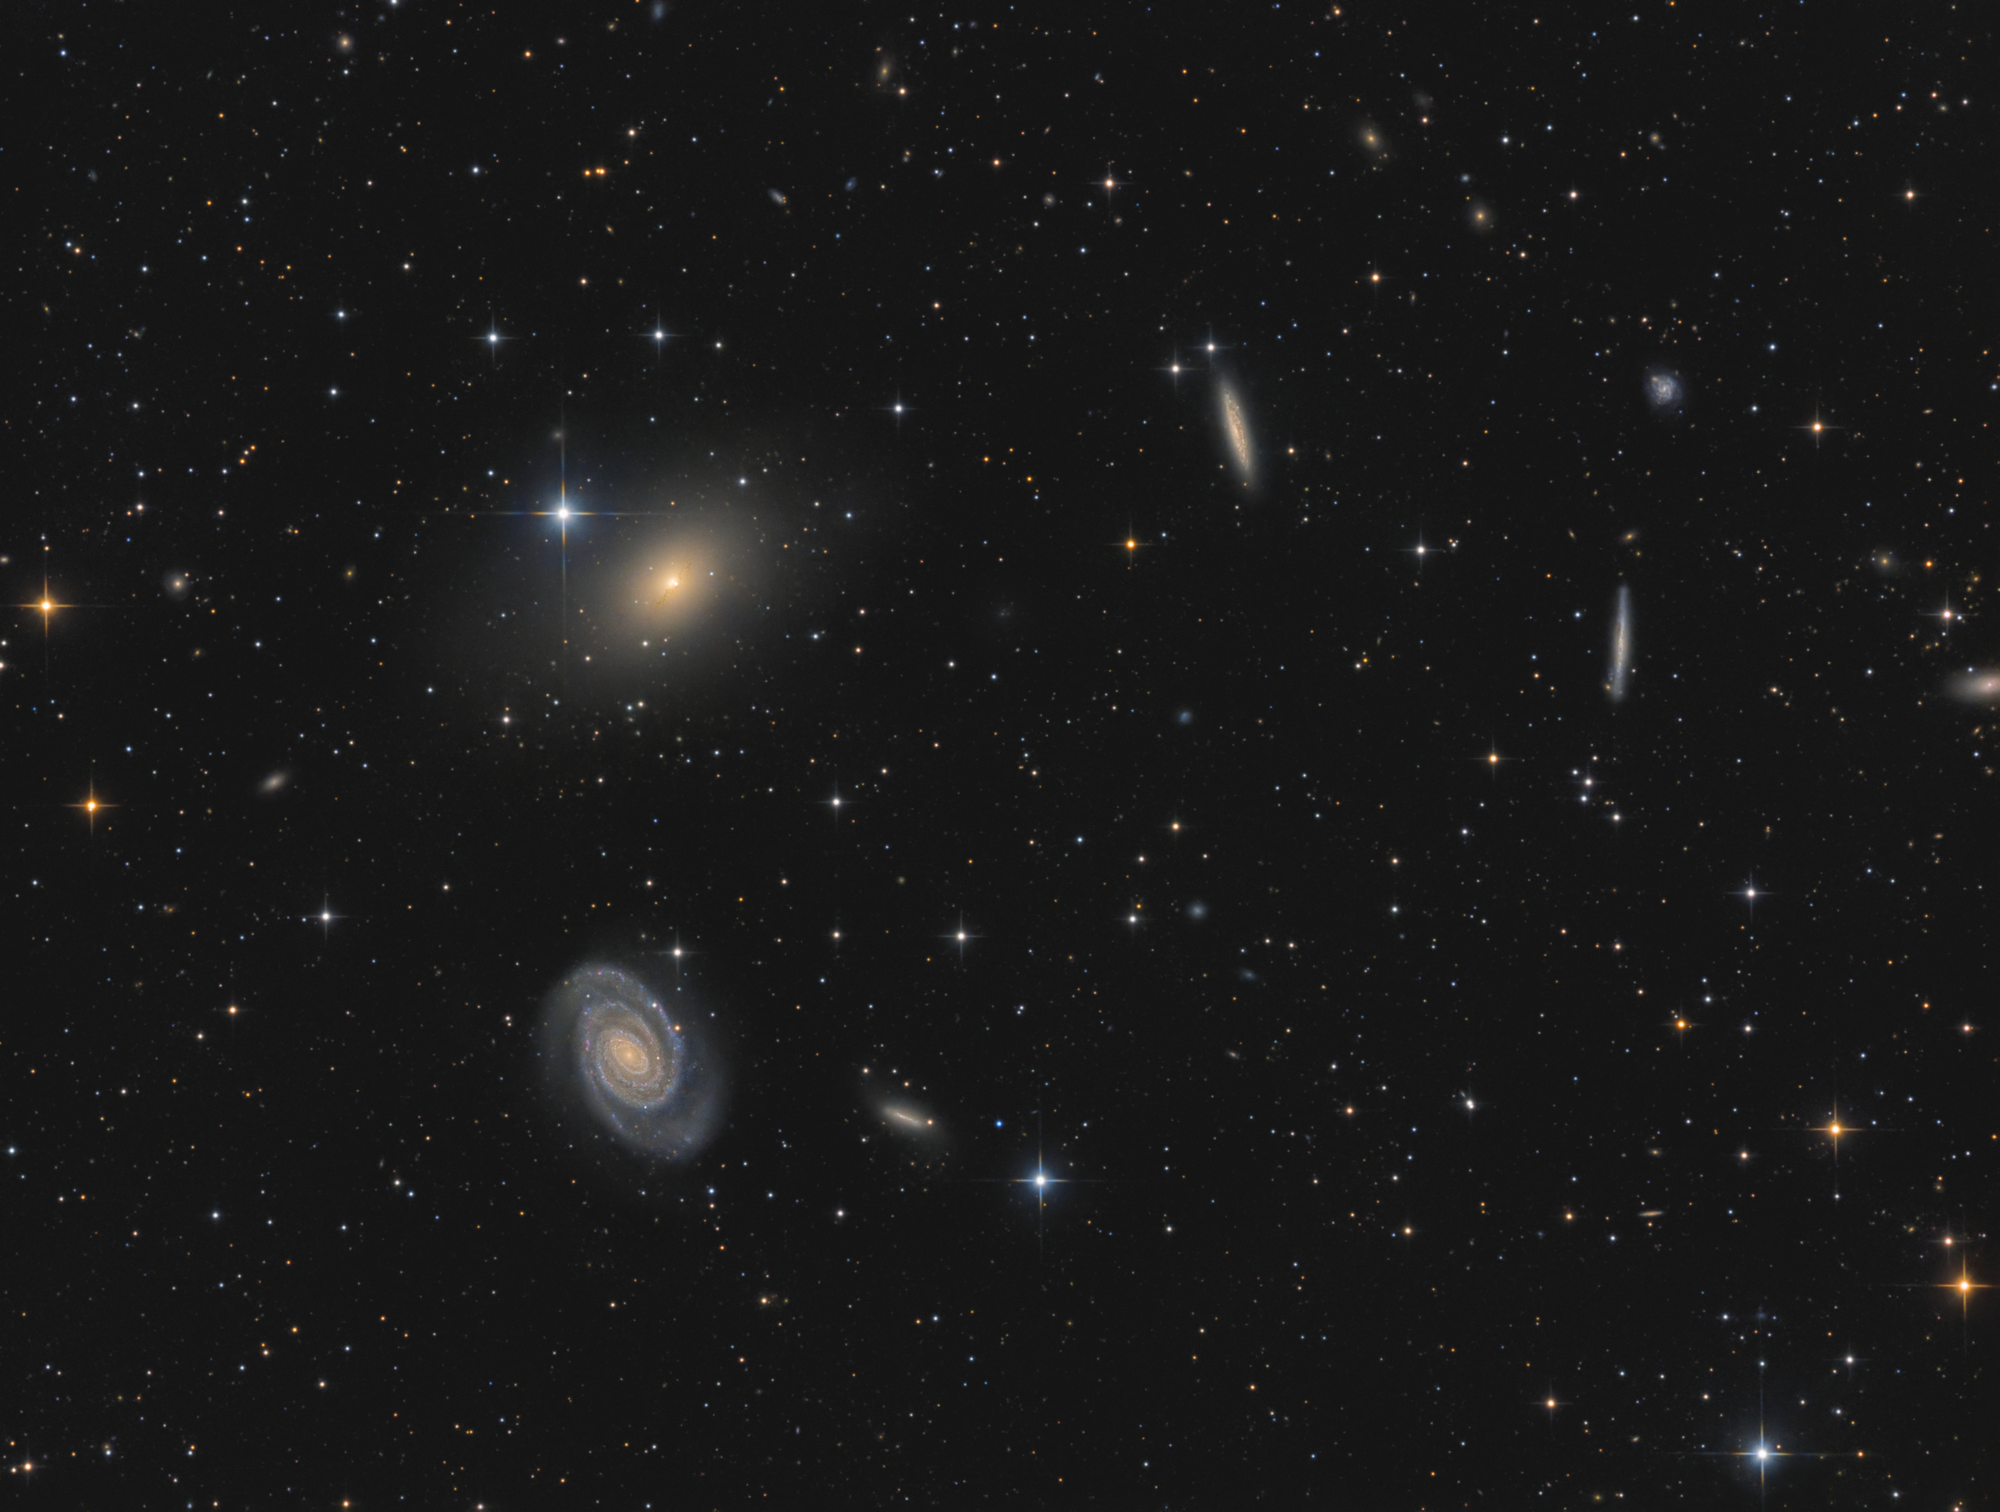 Galaxiengruppe NGC 5363/64